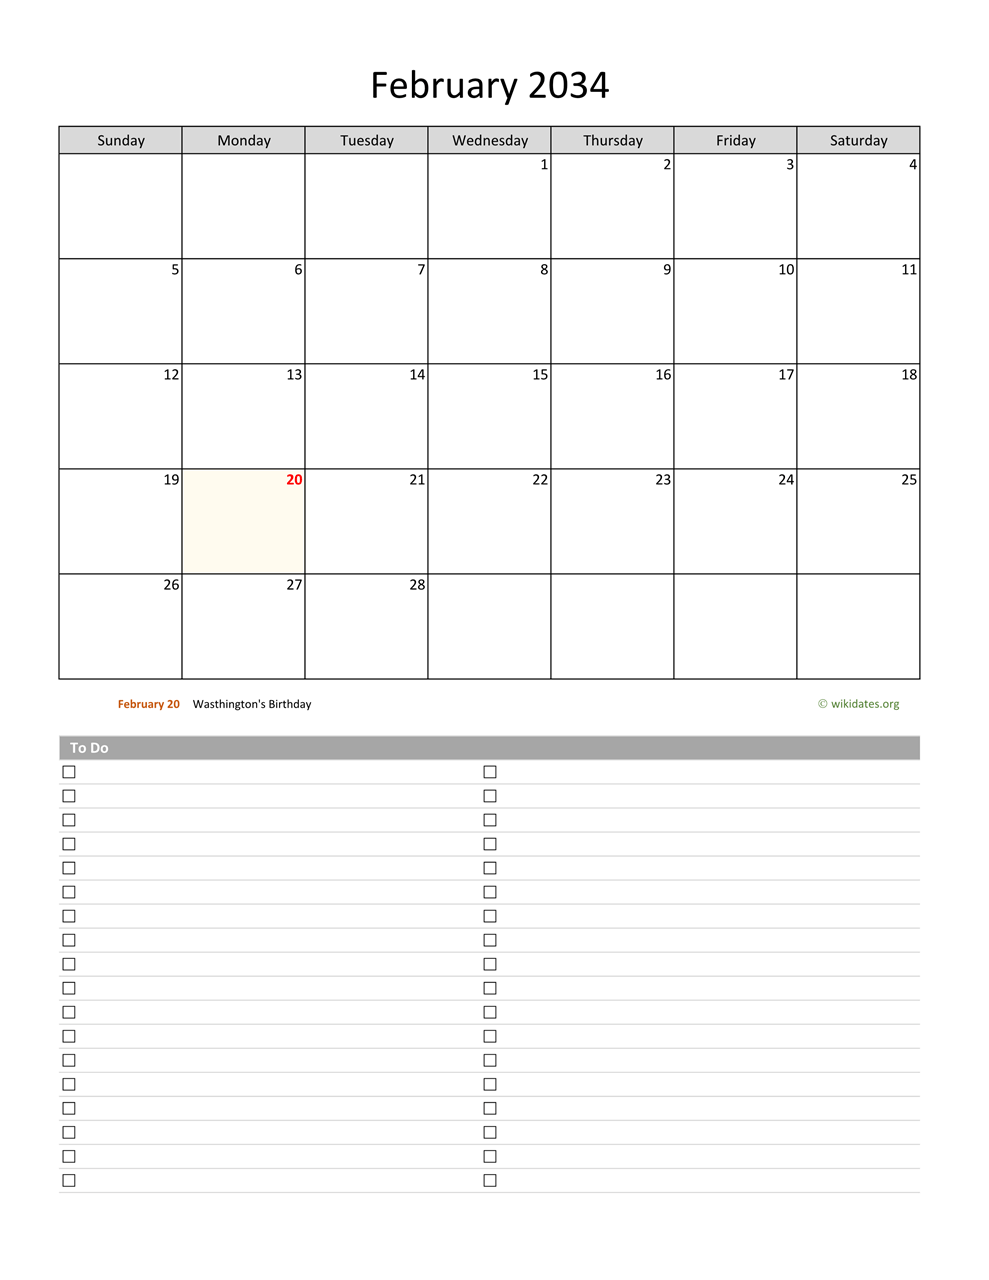 February 2034 Calendar with ToDo List